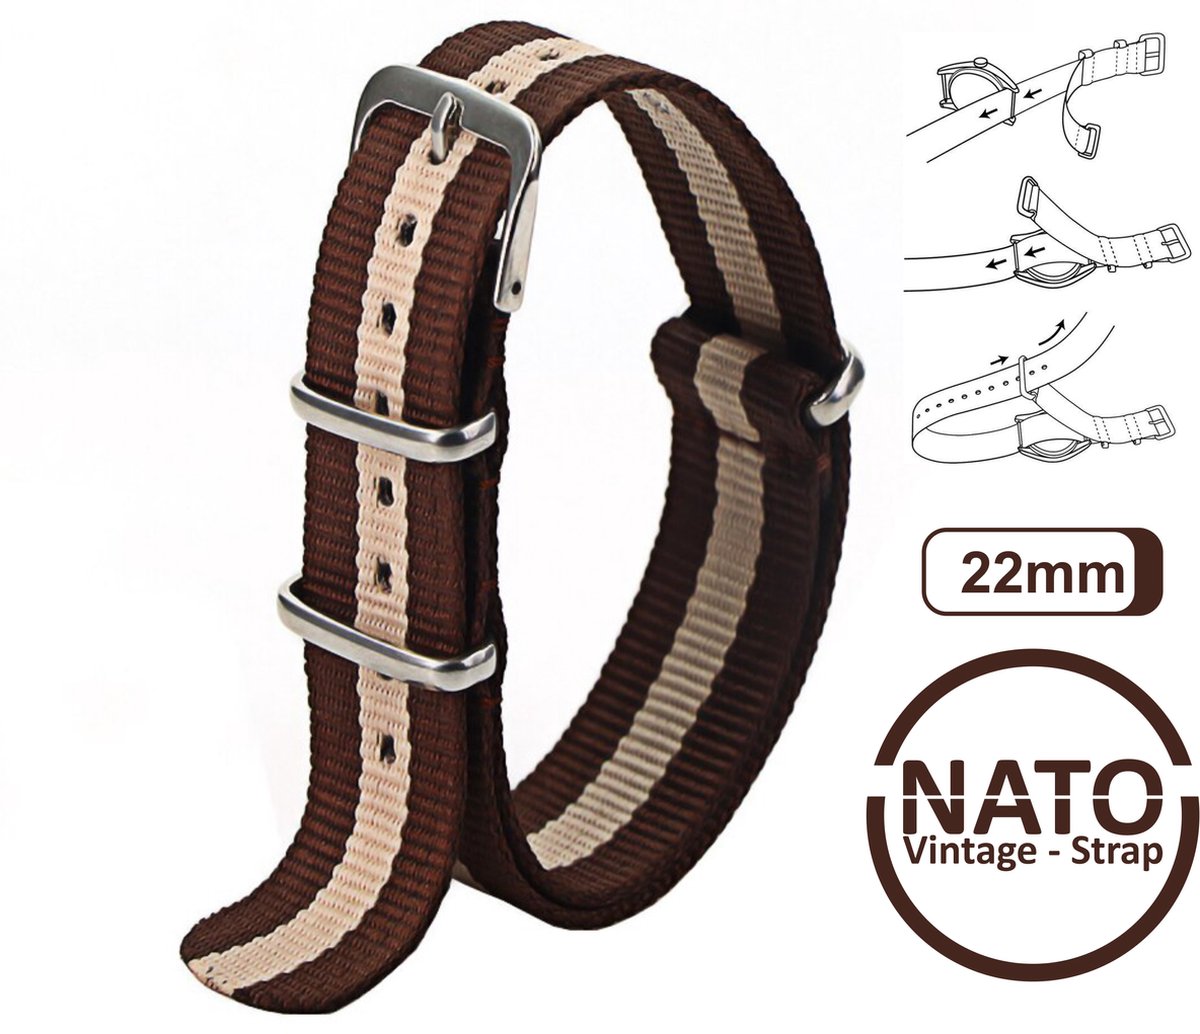 22mm Nato Strap Bruin met Khaki streep - Vintage James Bond - Nato Strap collectie - Mannen - Horlogebanden - Brown - 22 mm bandbreedte voor oa. Seiko Rolex Omega Casio en Citizen